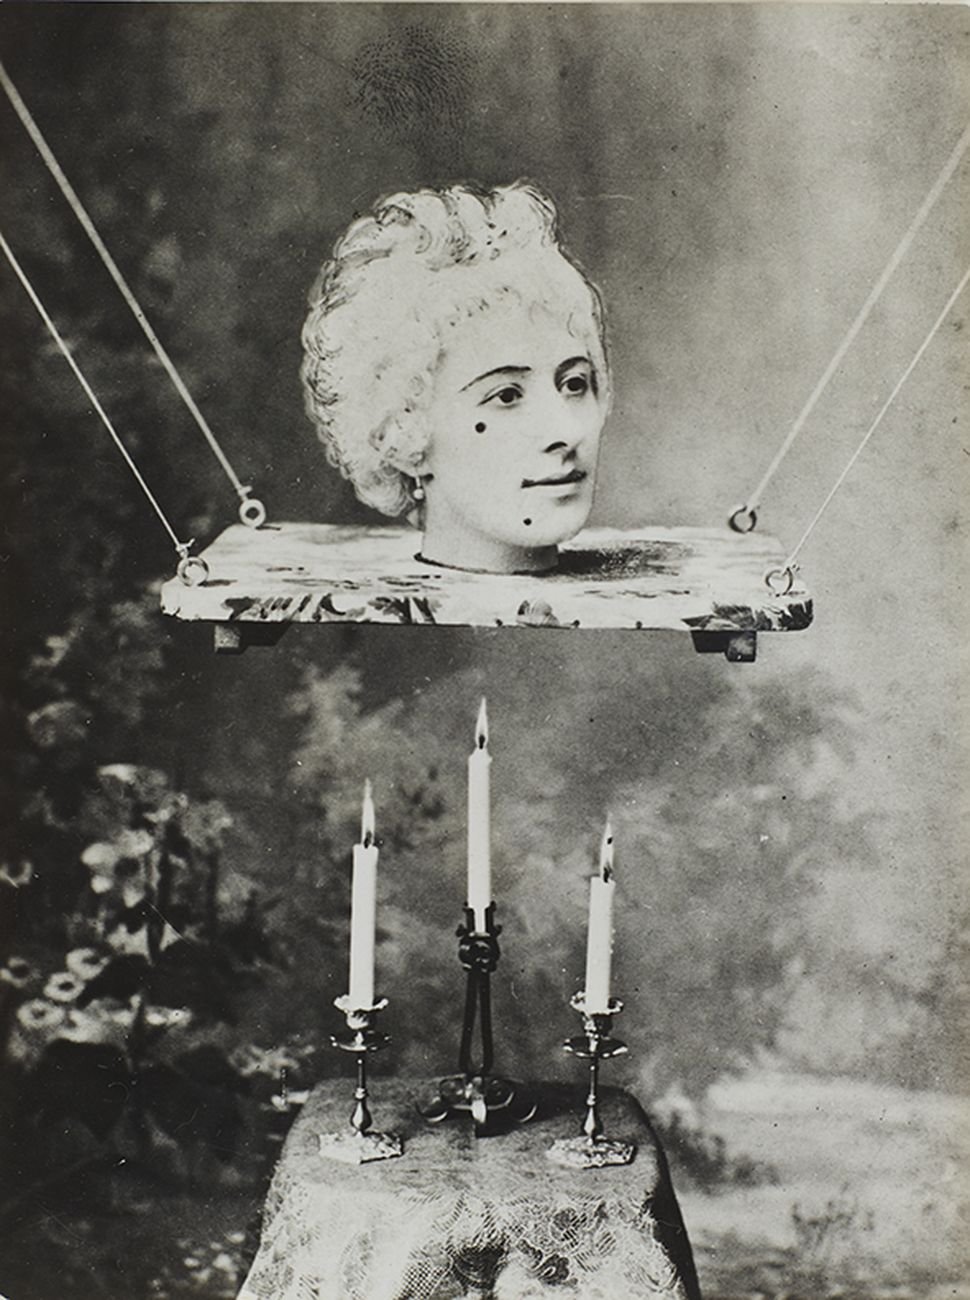 Fotogramma di presentazione del film di Georges Méliès “La source enchantée”, 1890 ca. Collezione Tony Oursler